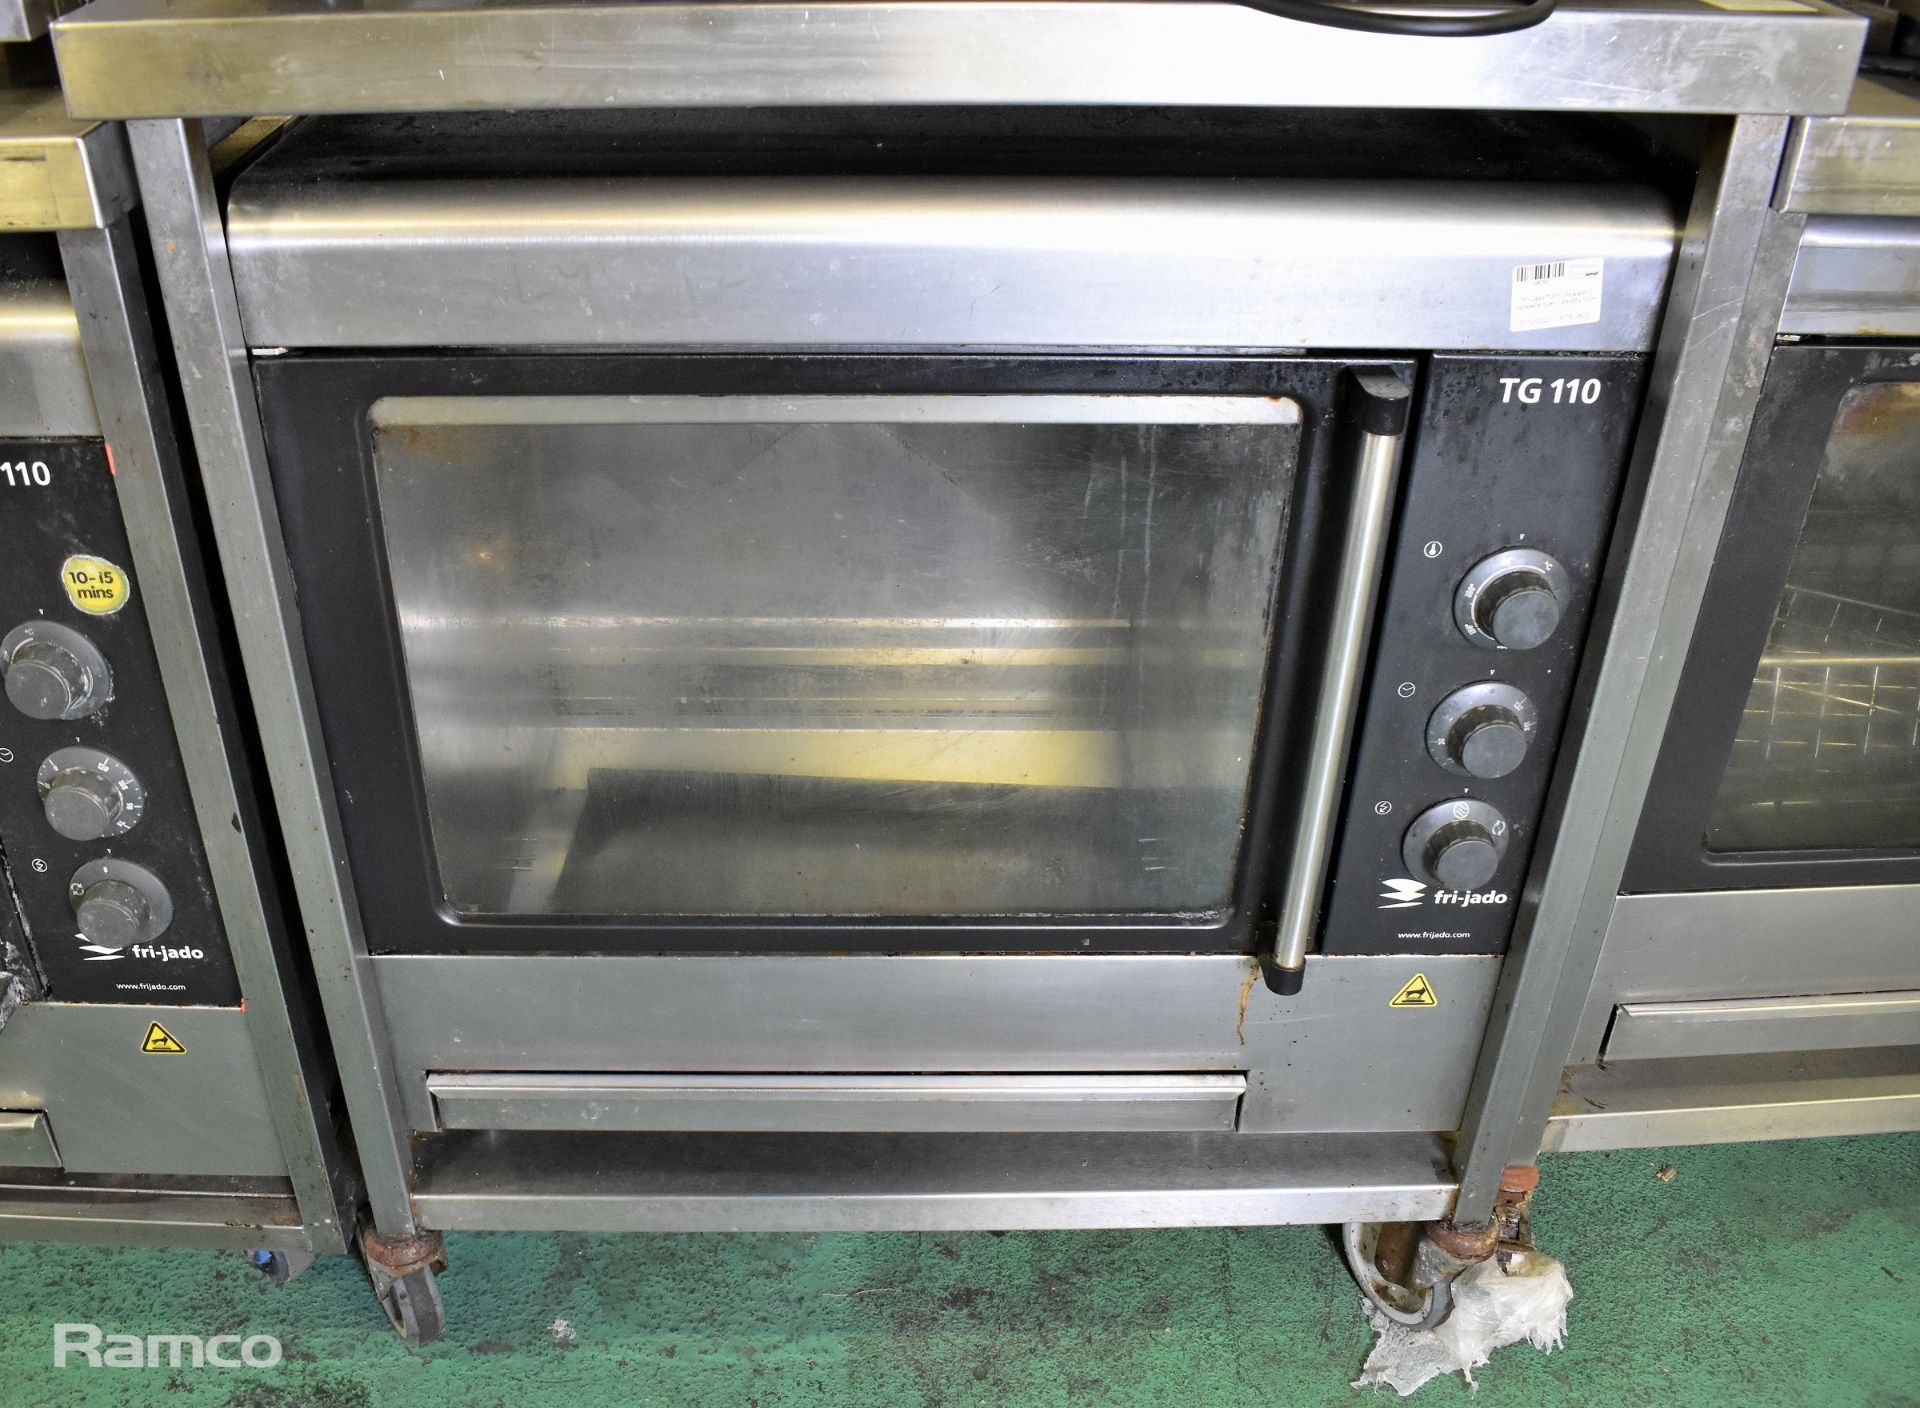 2x Fri-Jado TG110-M electric rotisserie ovens - 84 x 55 x 75cm, Stainless steel trolley - Image 4 of 6